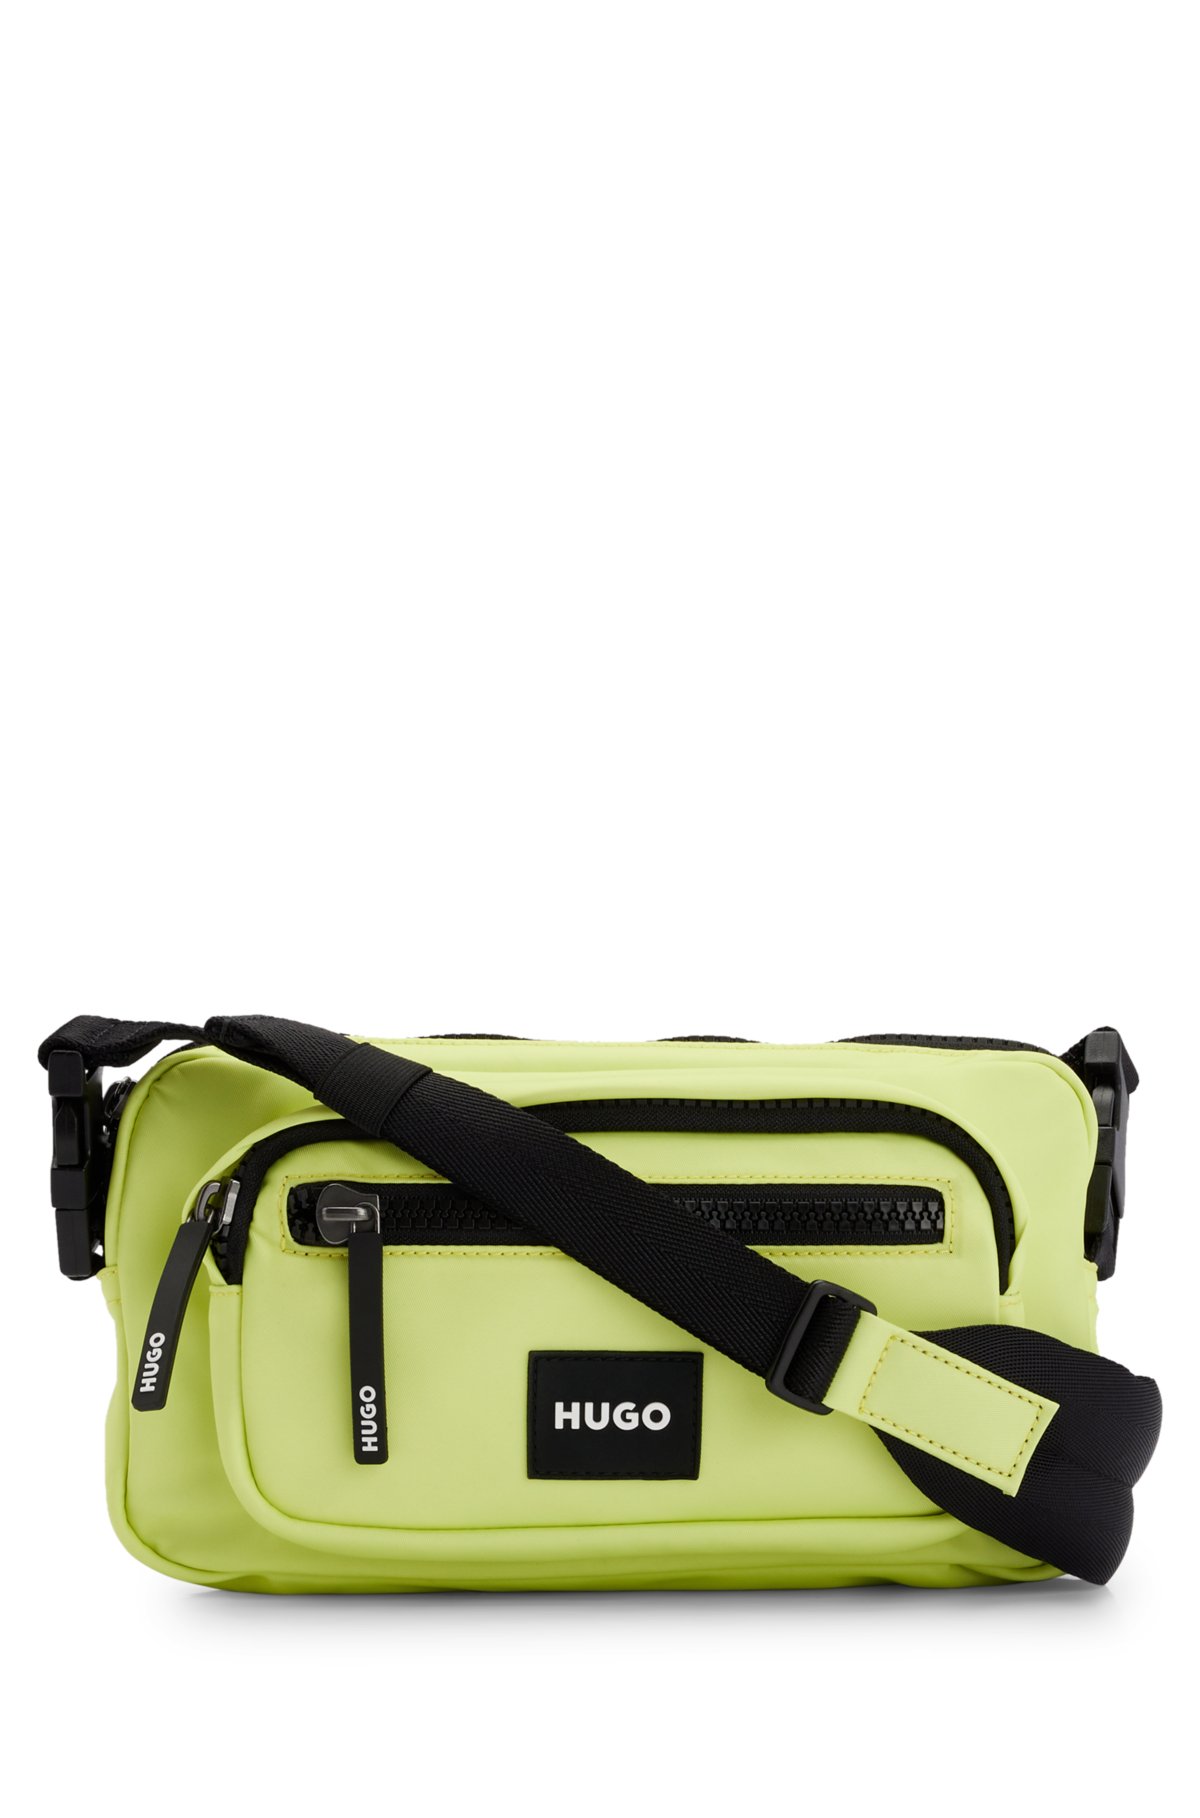 - HUGO rubberised bag Crossbody with patch logo